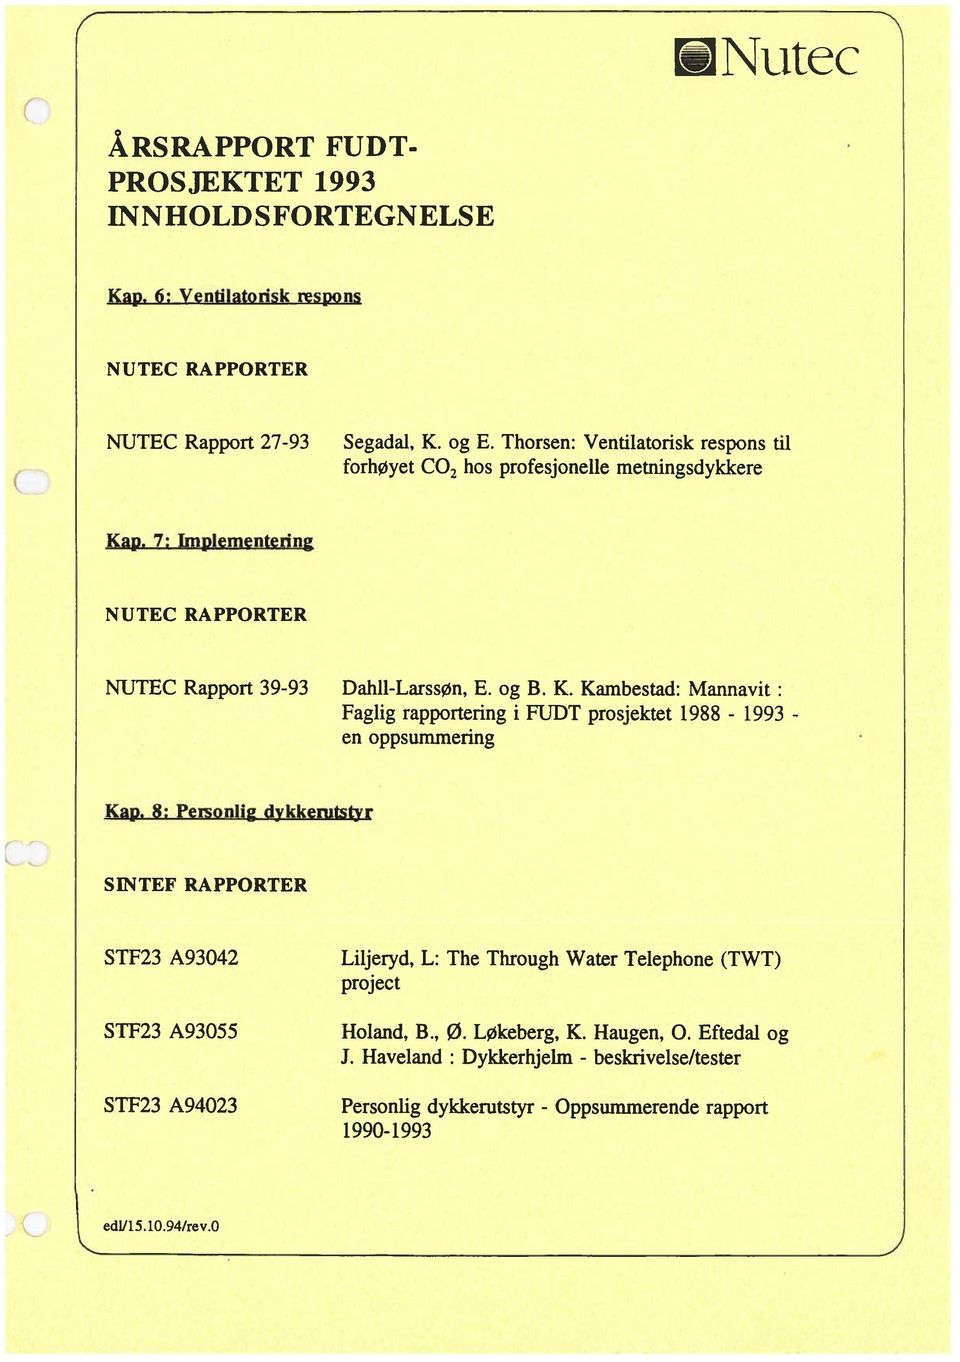 p. 7: Implementering NUTEC RAPPORTER NUTEC Rapport 39-93 Dahll-LarssØn, E. og B. K.